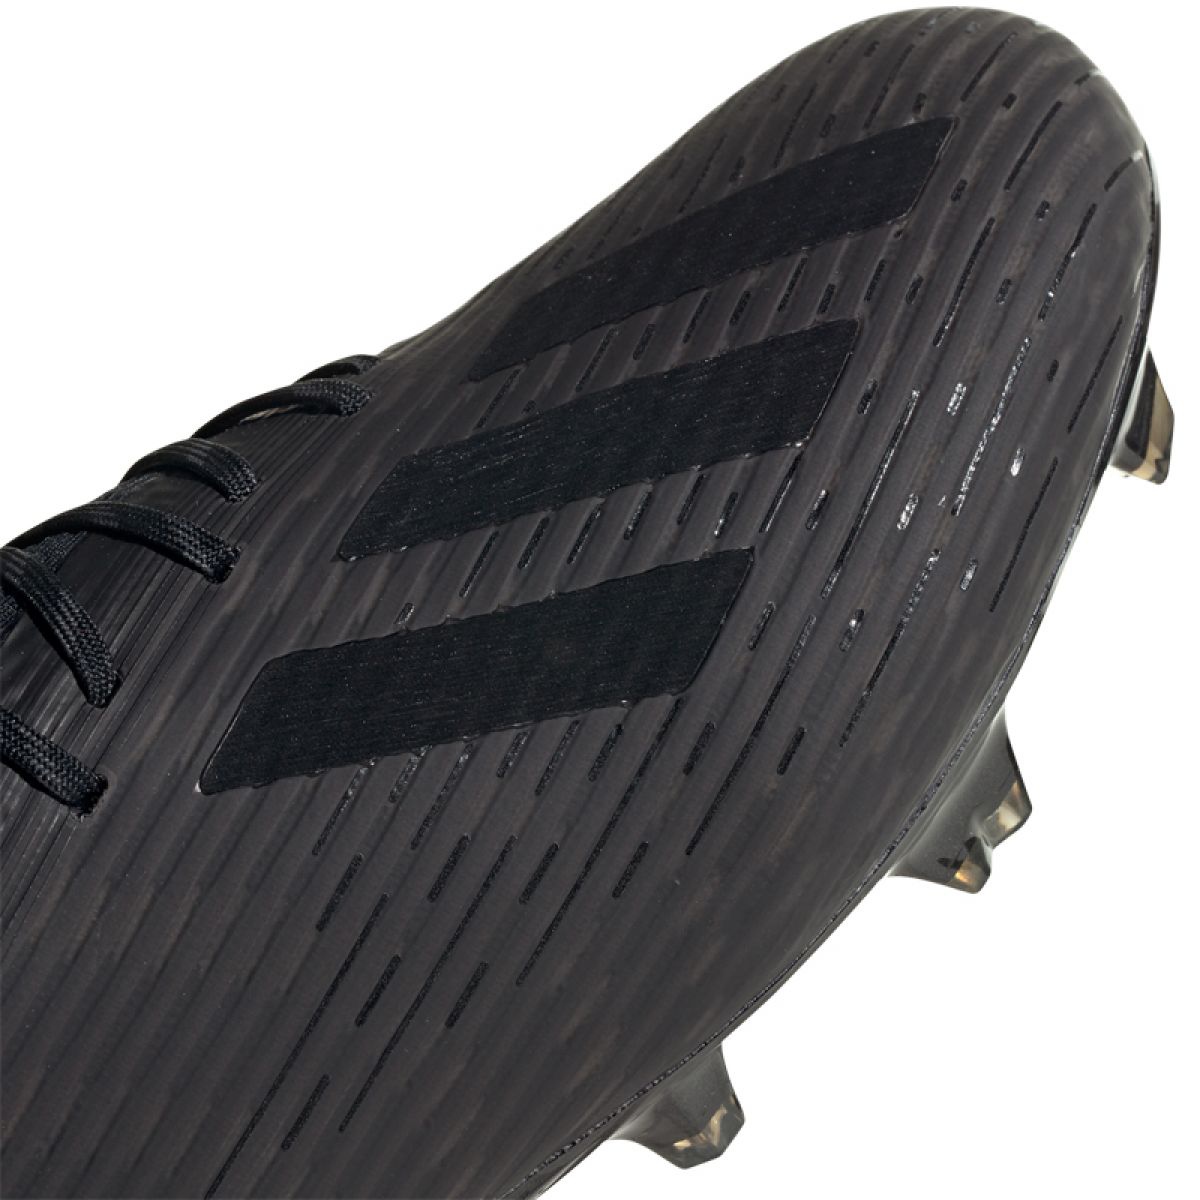 Adidas X 19.1 Fg M F35314 football boots multicolored black - KeeShoes